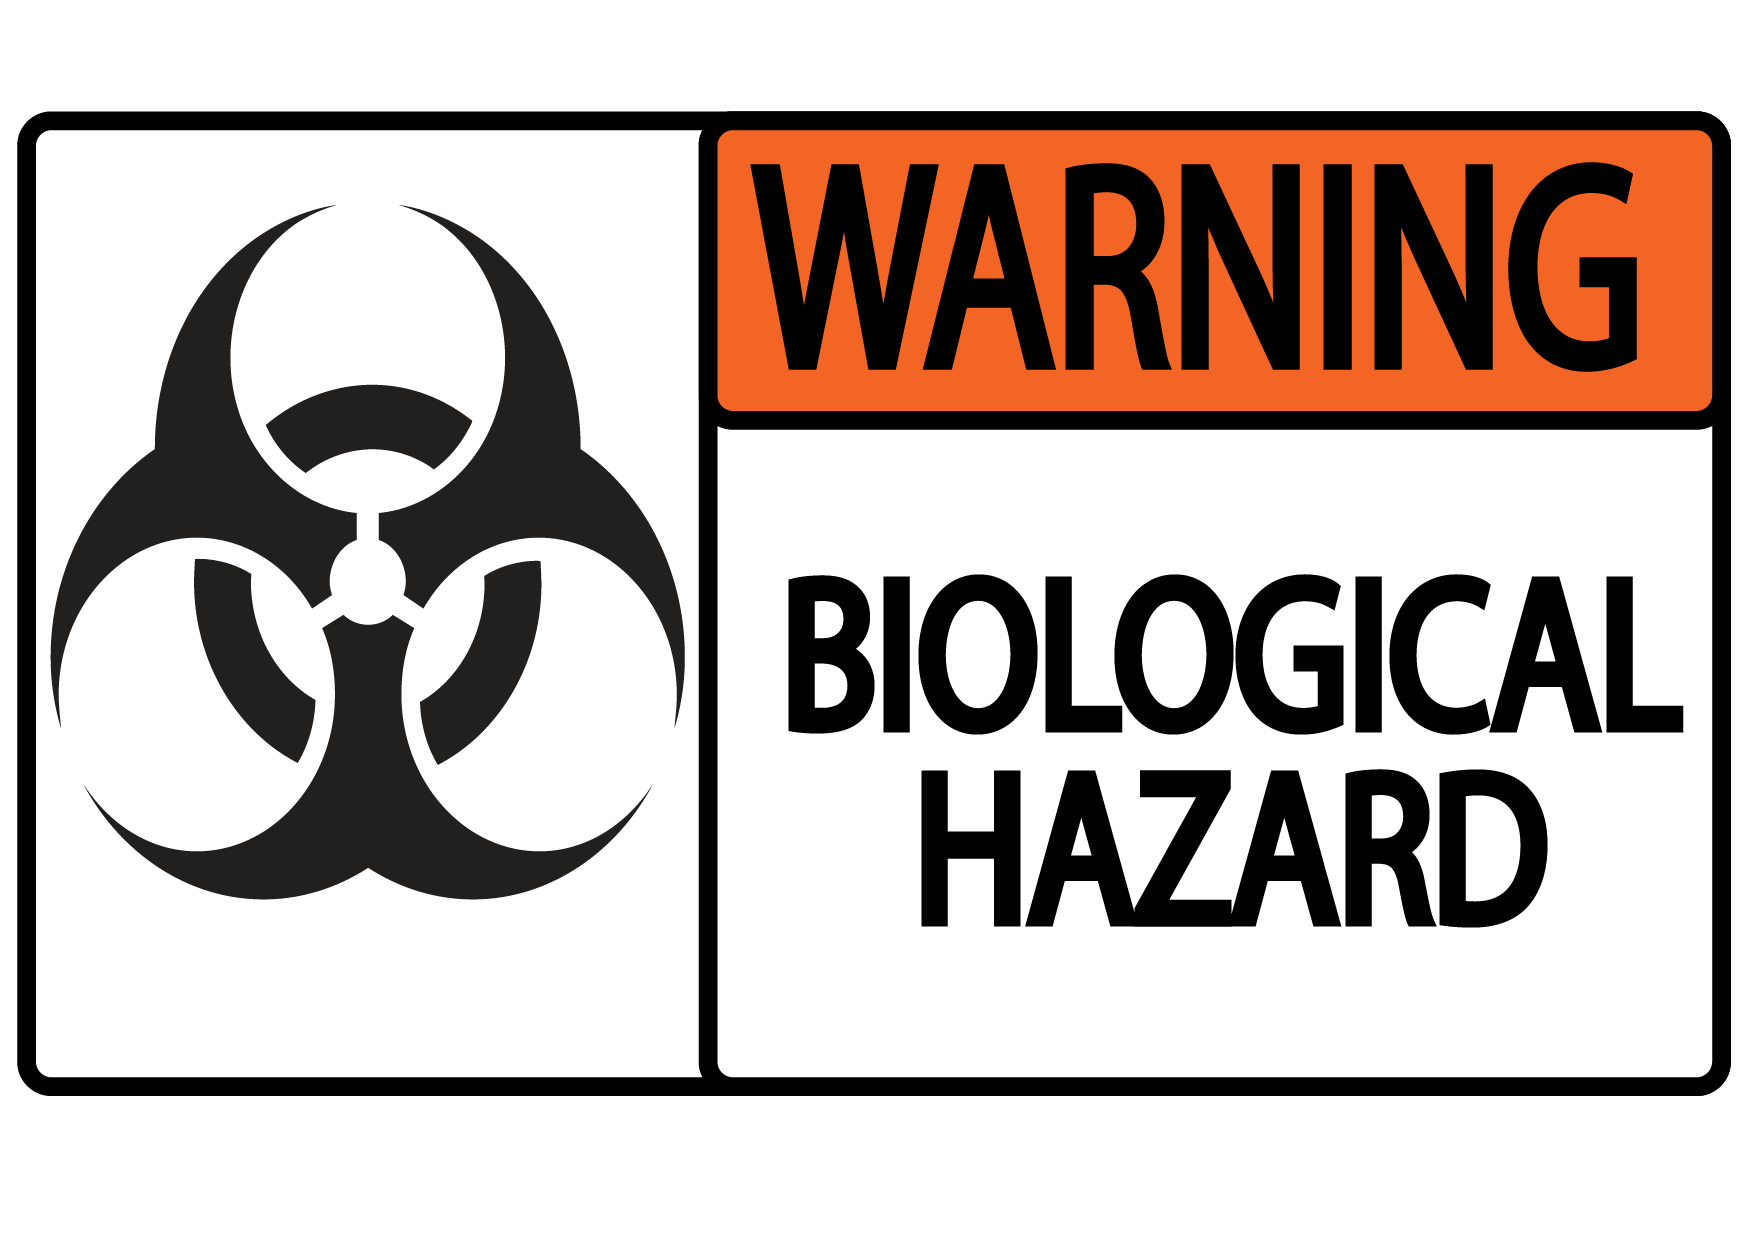 Warning "Biological Hazard" Durable Matte Laminated Vinyl Floor Sign- Various Sizes Available